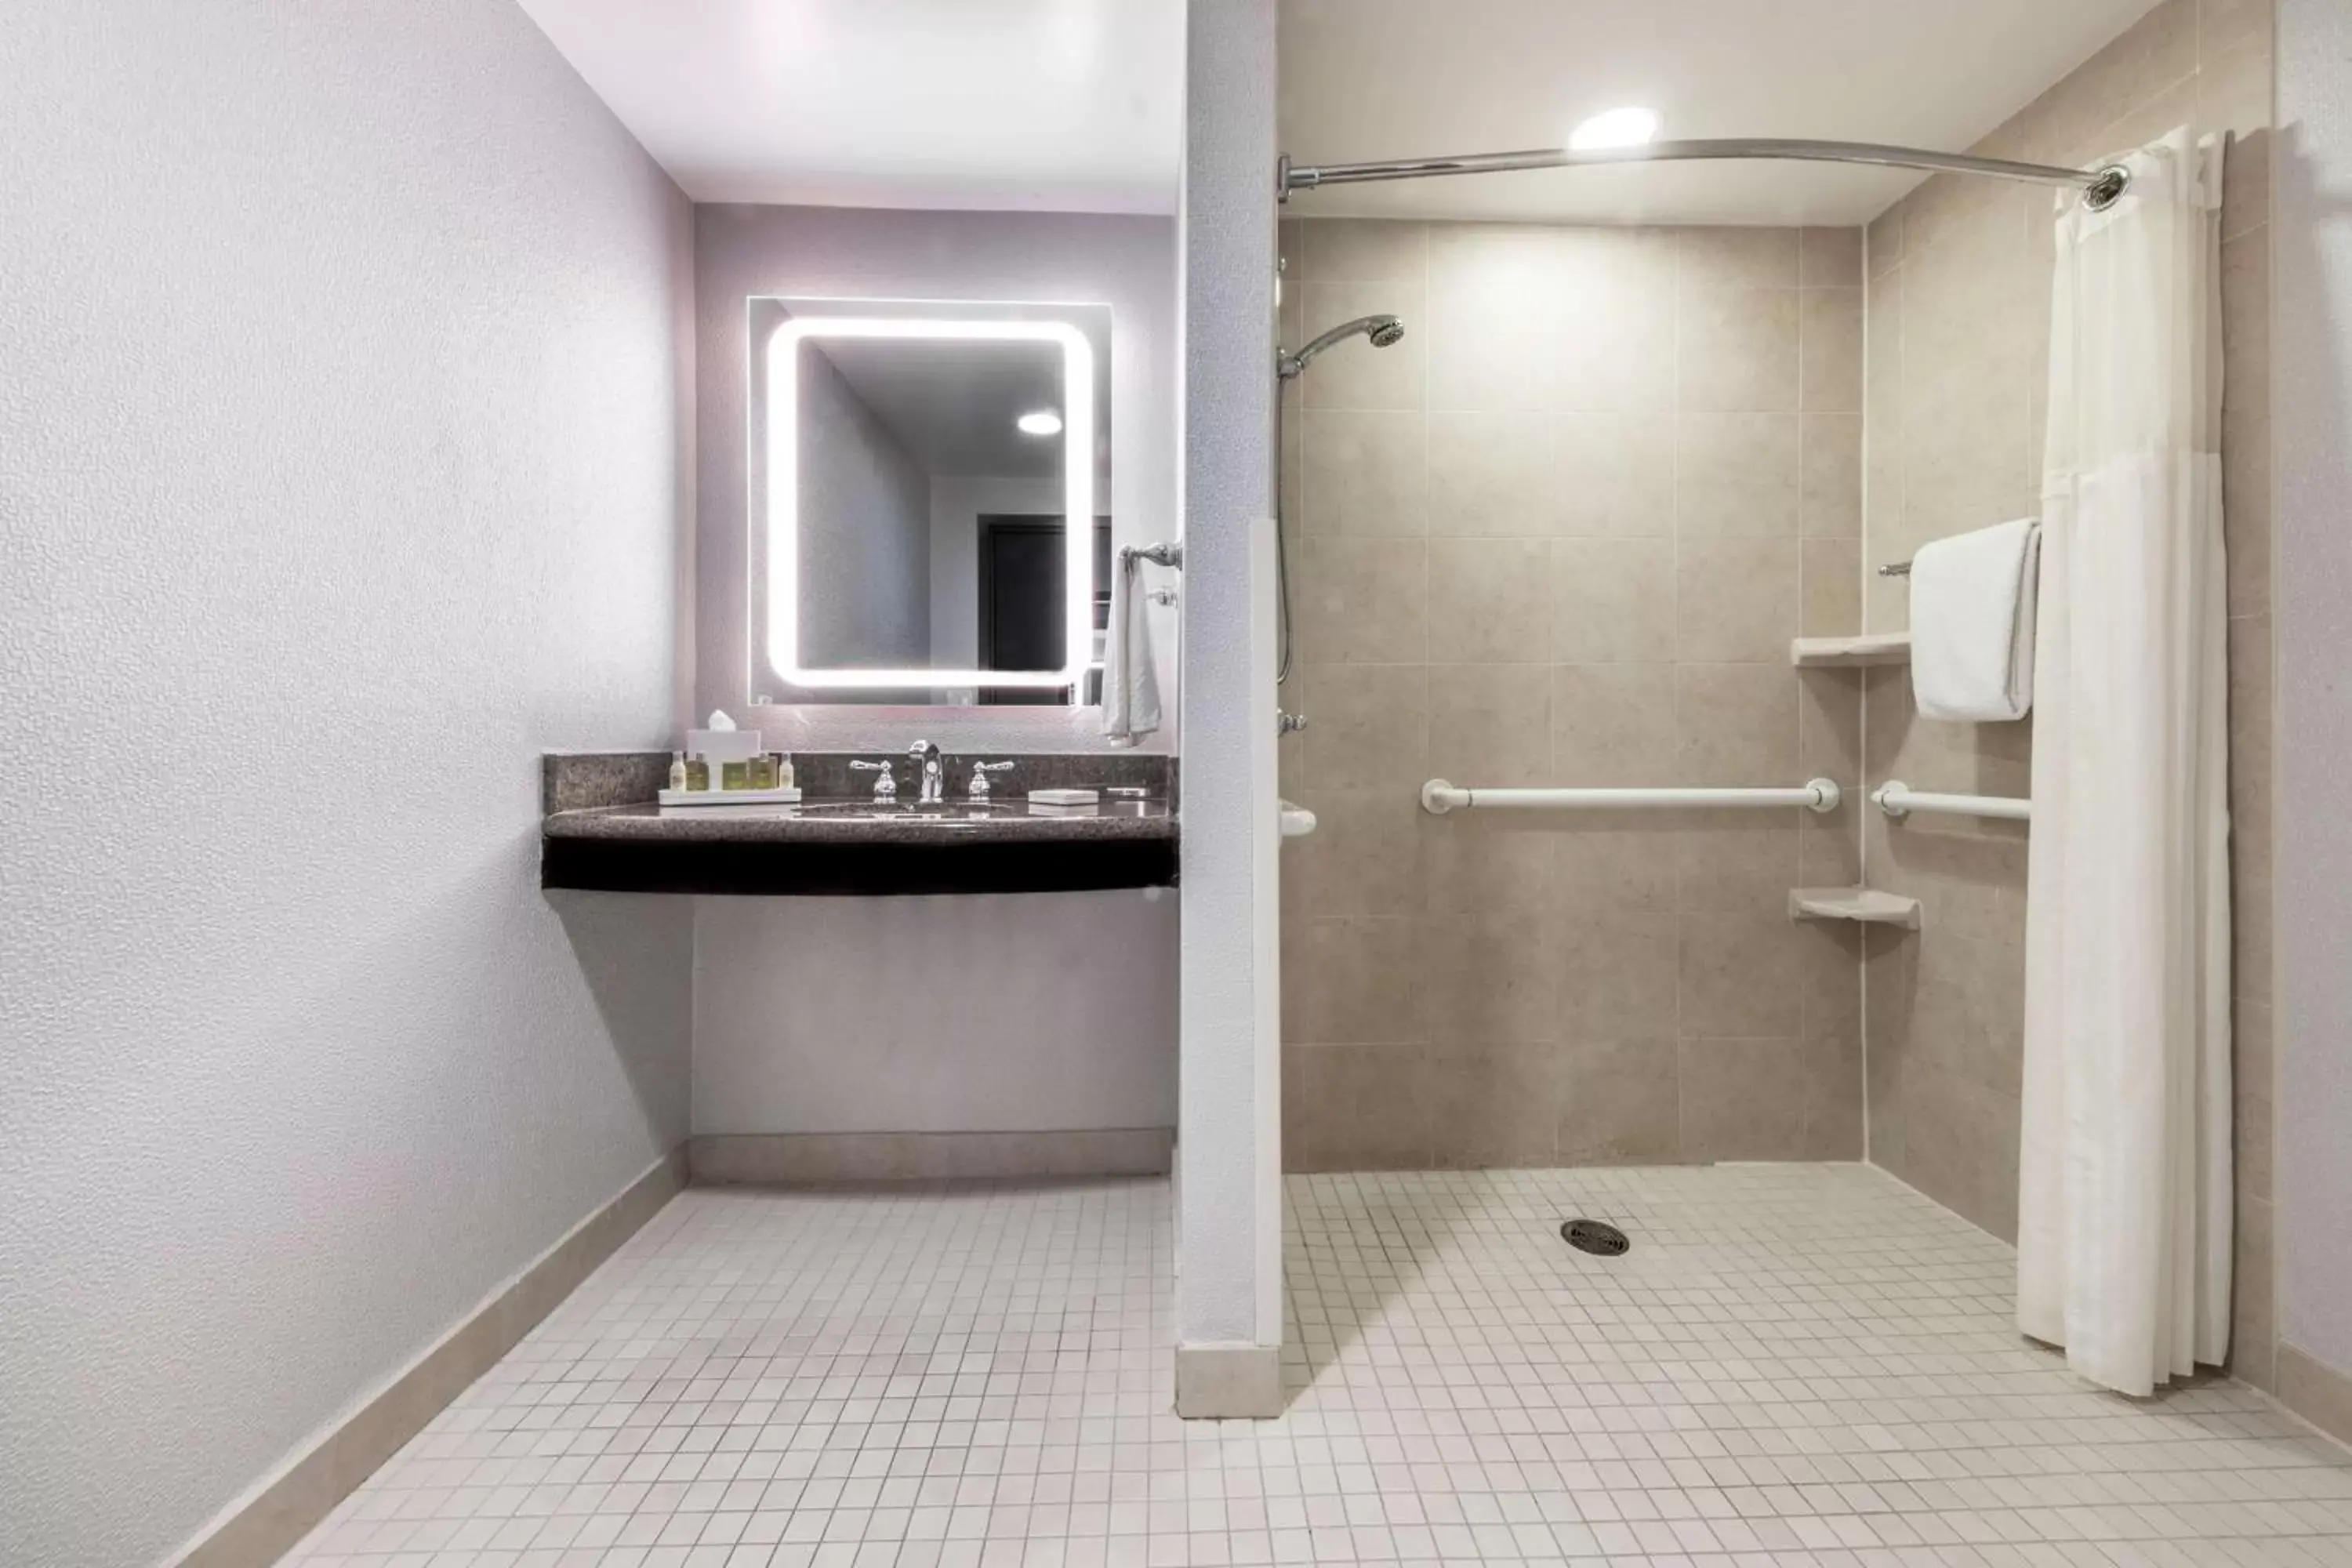 Bathroom in DoubleTree by Hilton Newark Penn Station, NJ